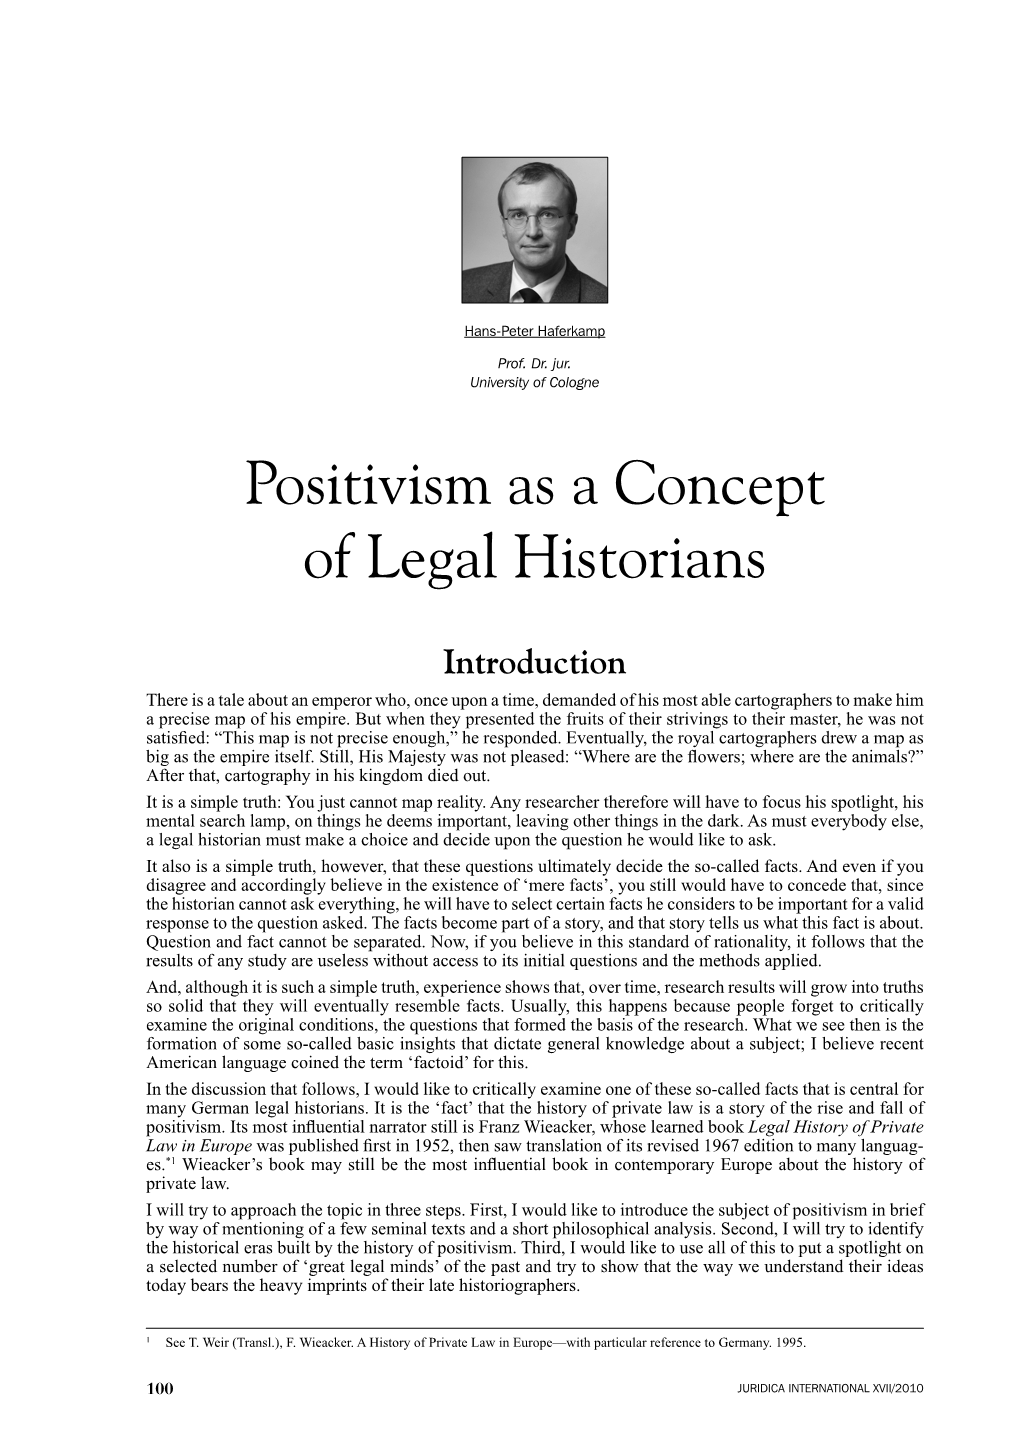 Positivism As a Concept of Legal Historians